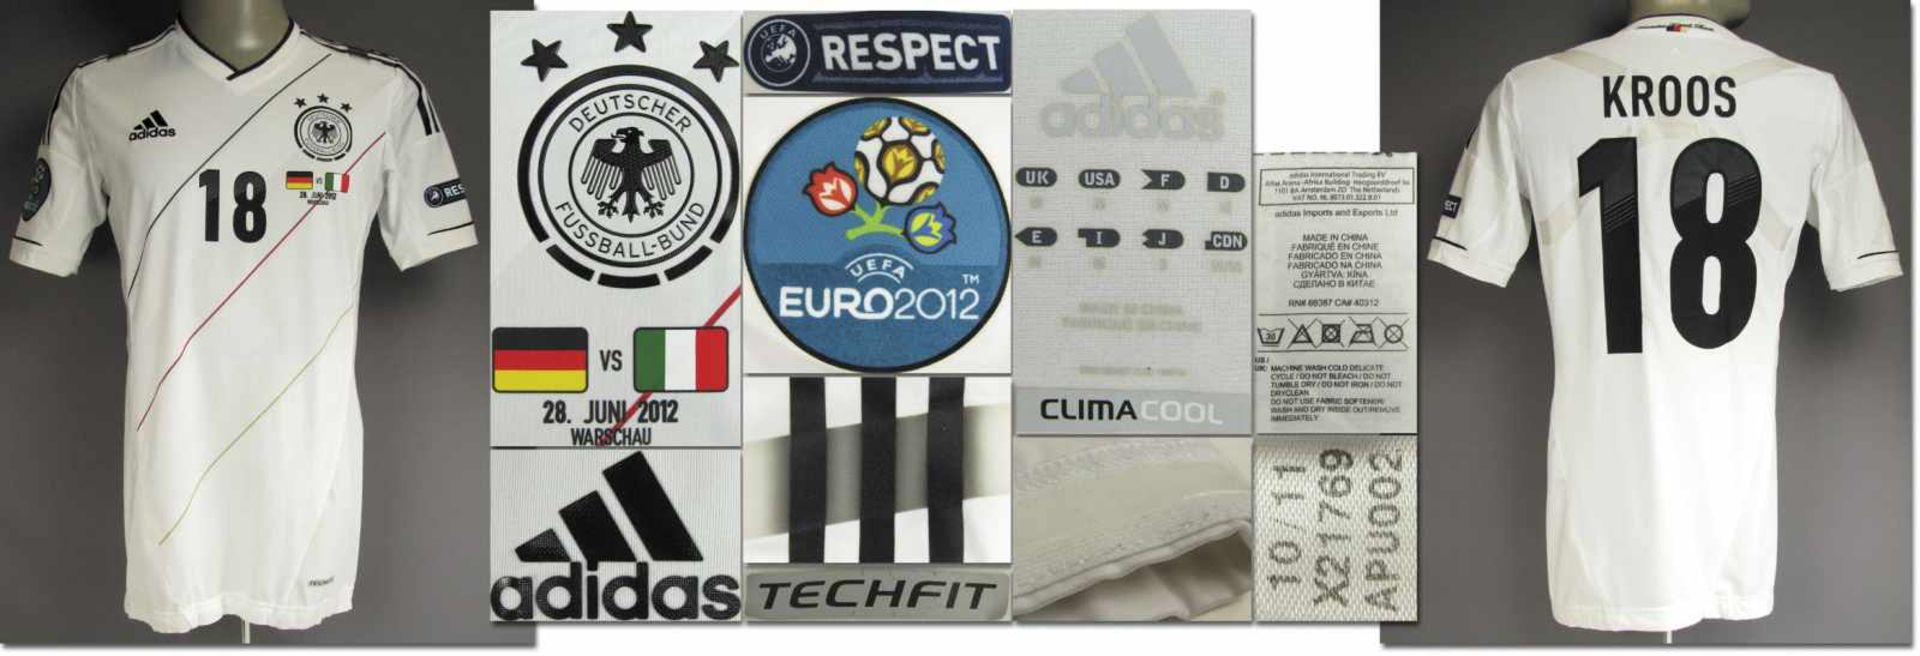 UEFA Euro 2012 match worn football shirt Germany - Original match worn shirt Germany with number 18.